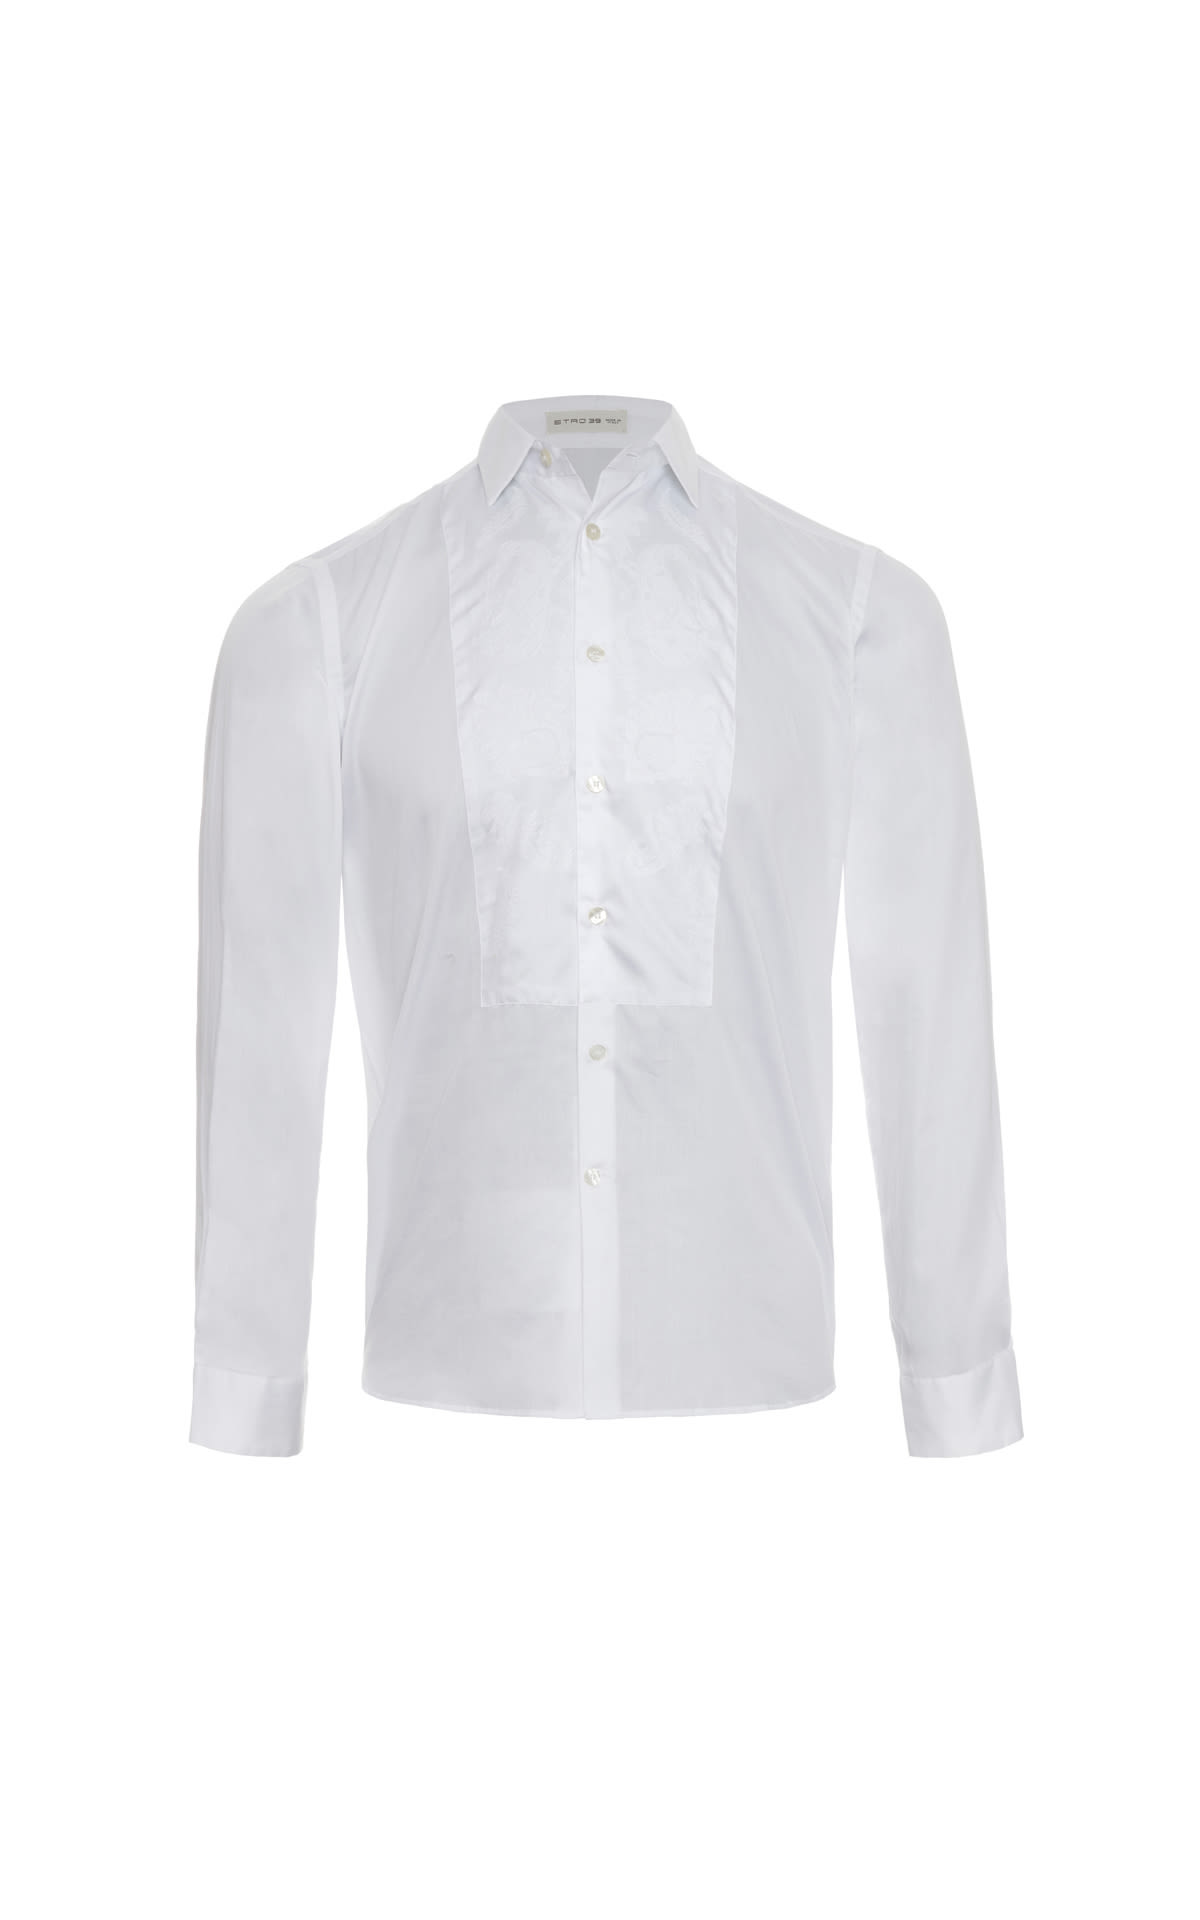 Etro  Men's white shirt from Bicester Village